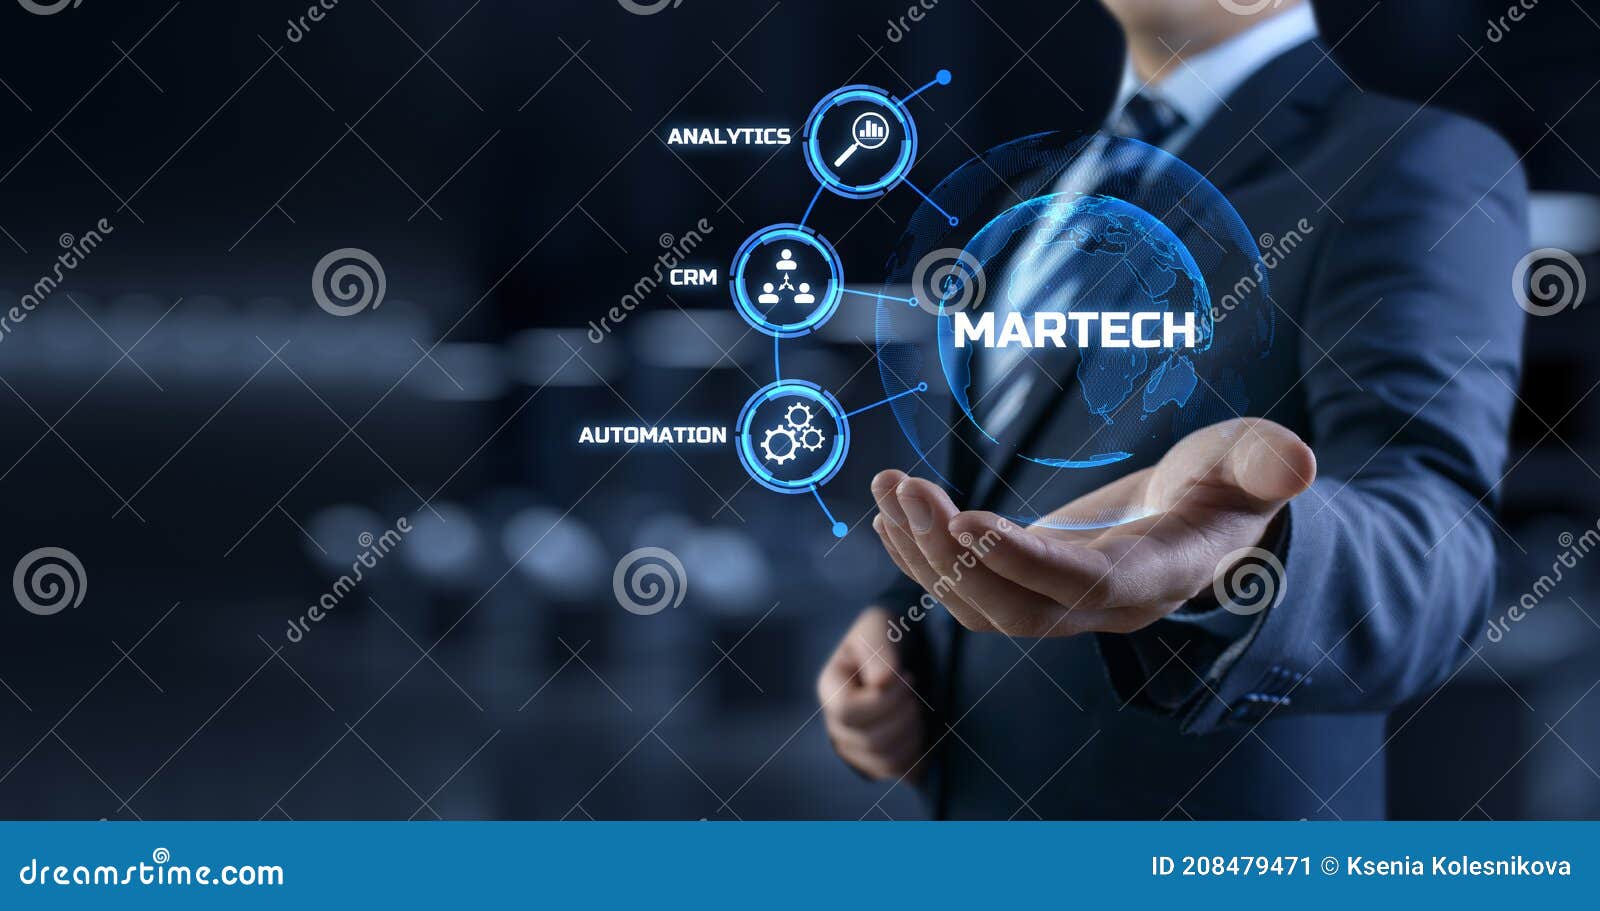 martech marketing technology concept on virtual screen interface.